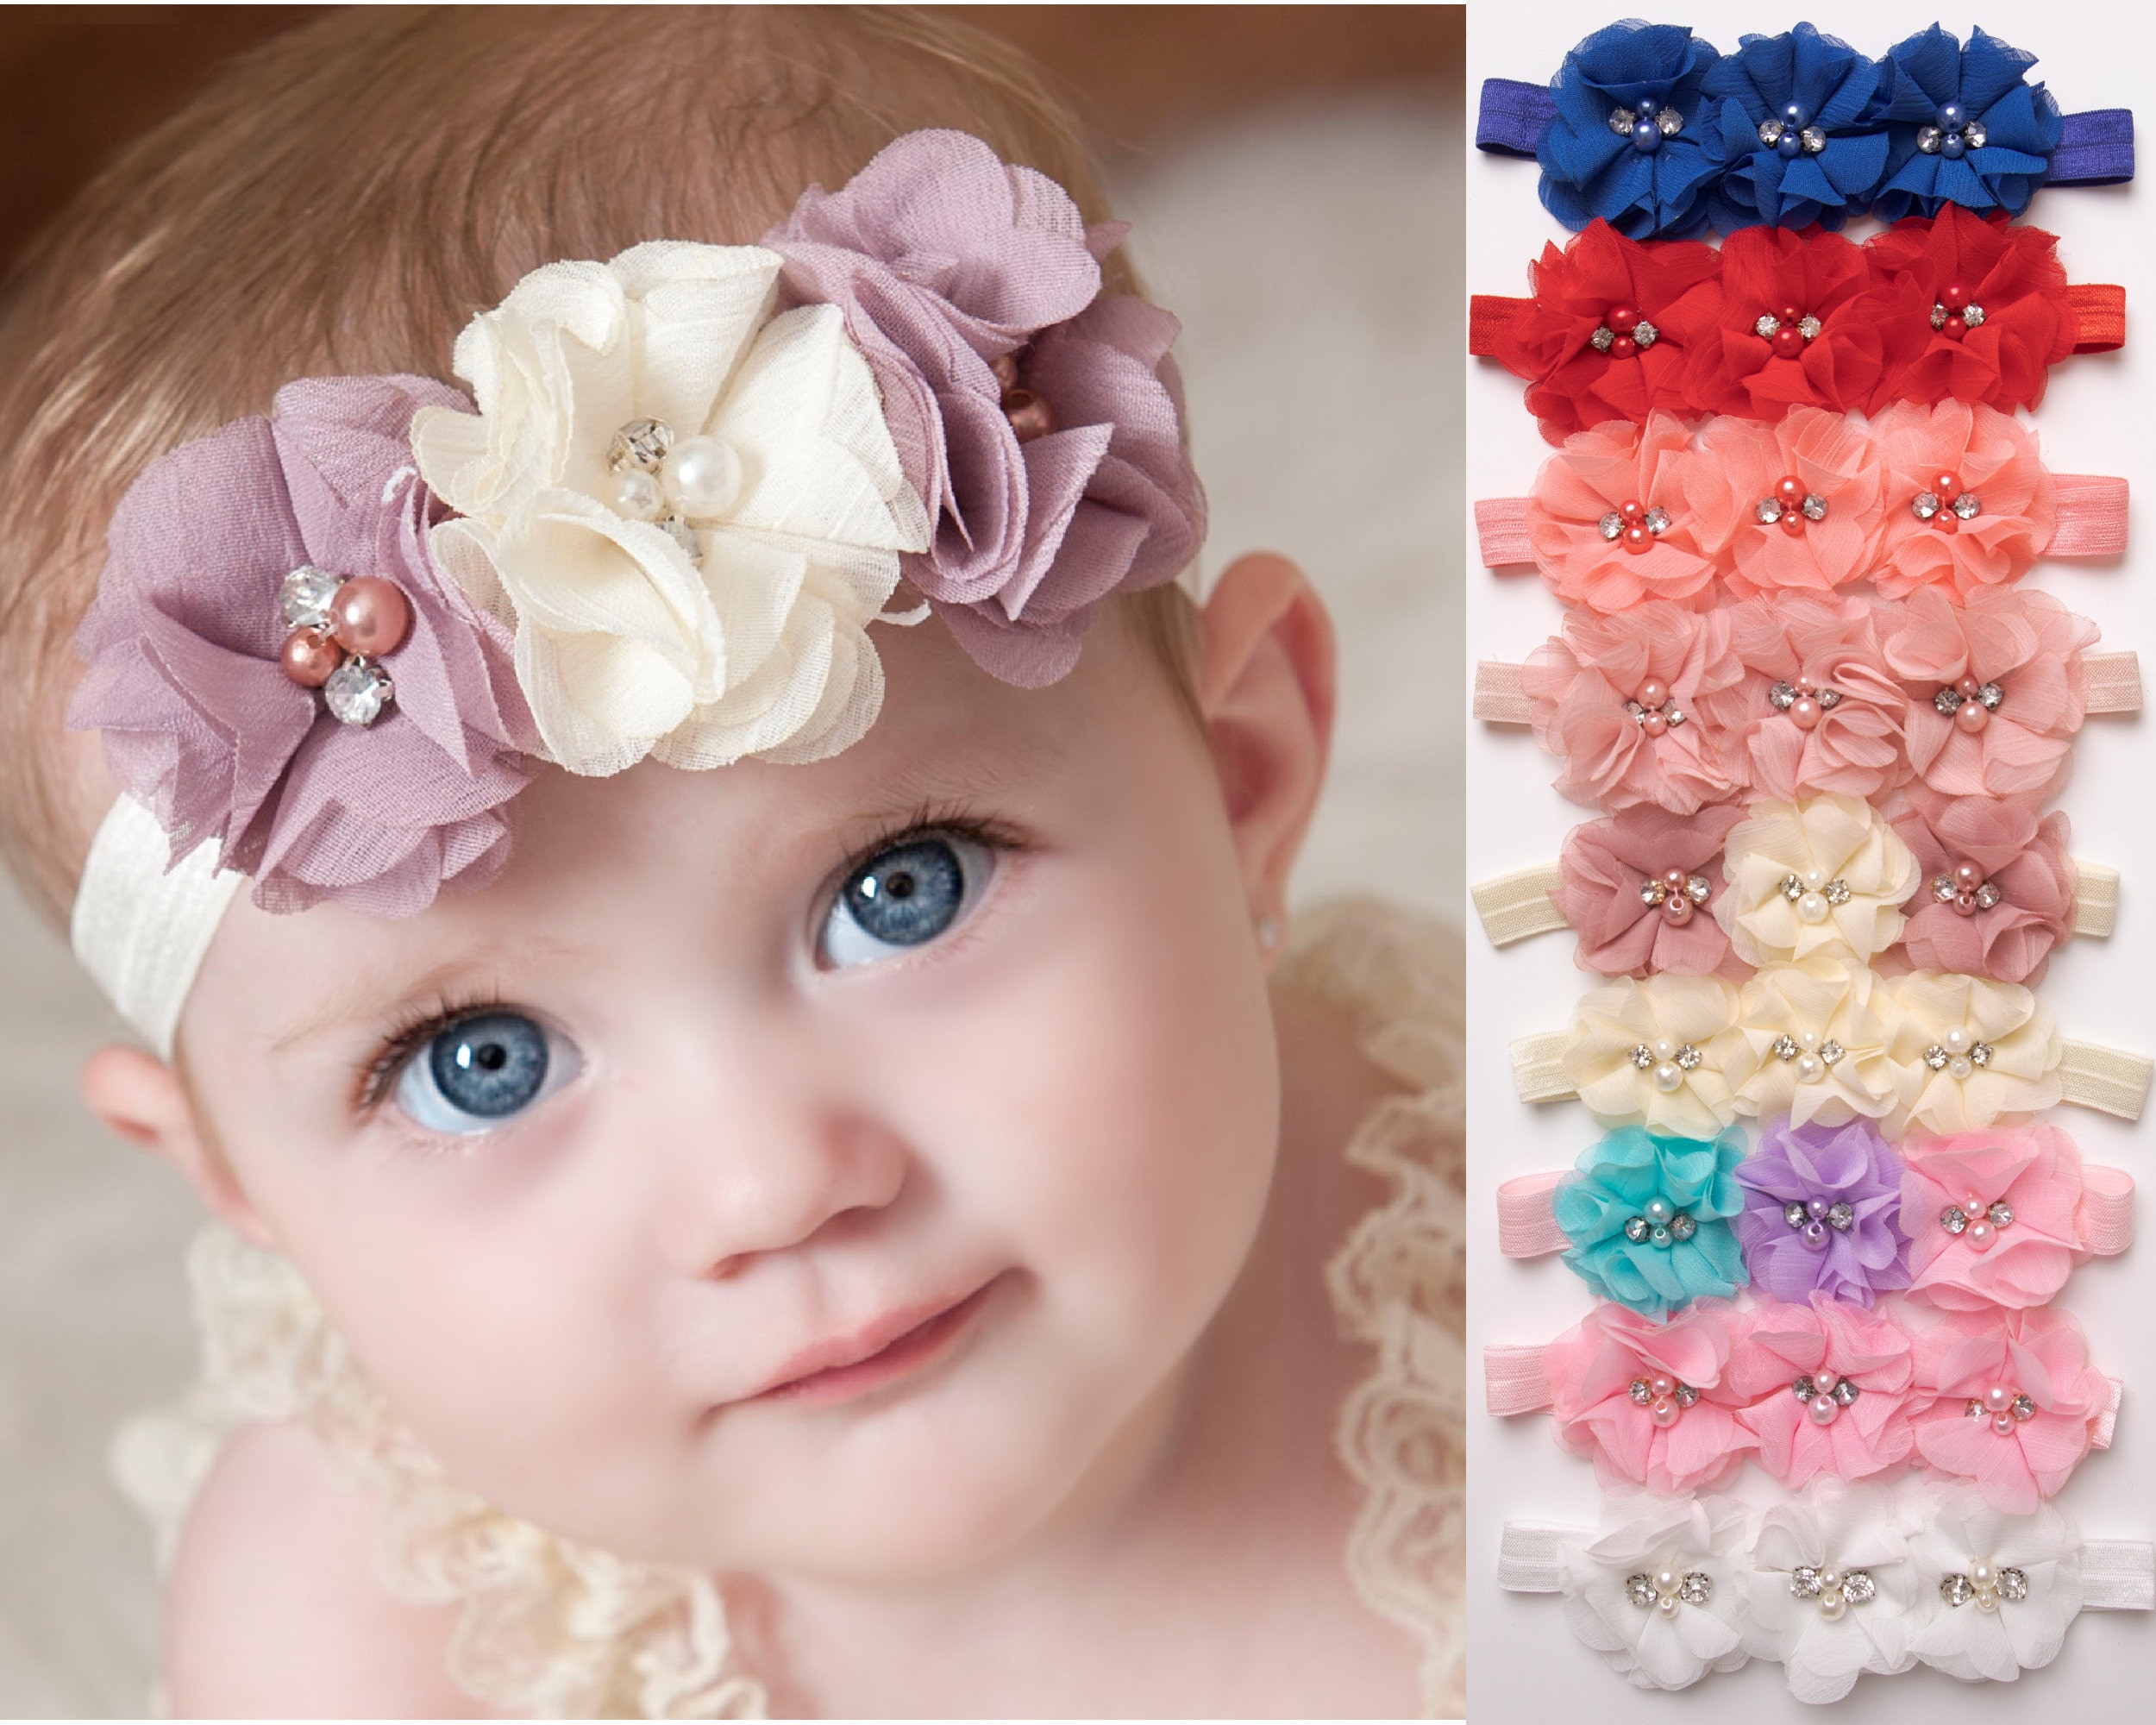 Baby Newborn Toddler Kids Girls Flower Headband Hair Band Chic Hair Accessories